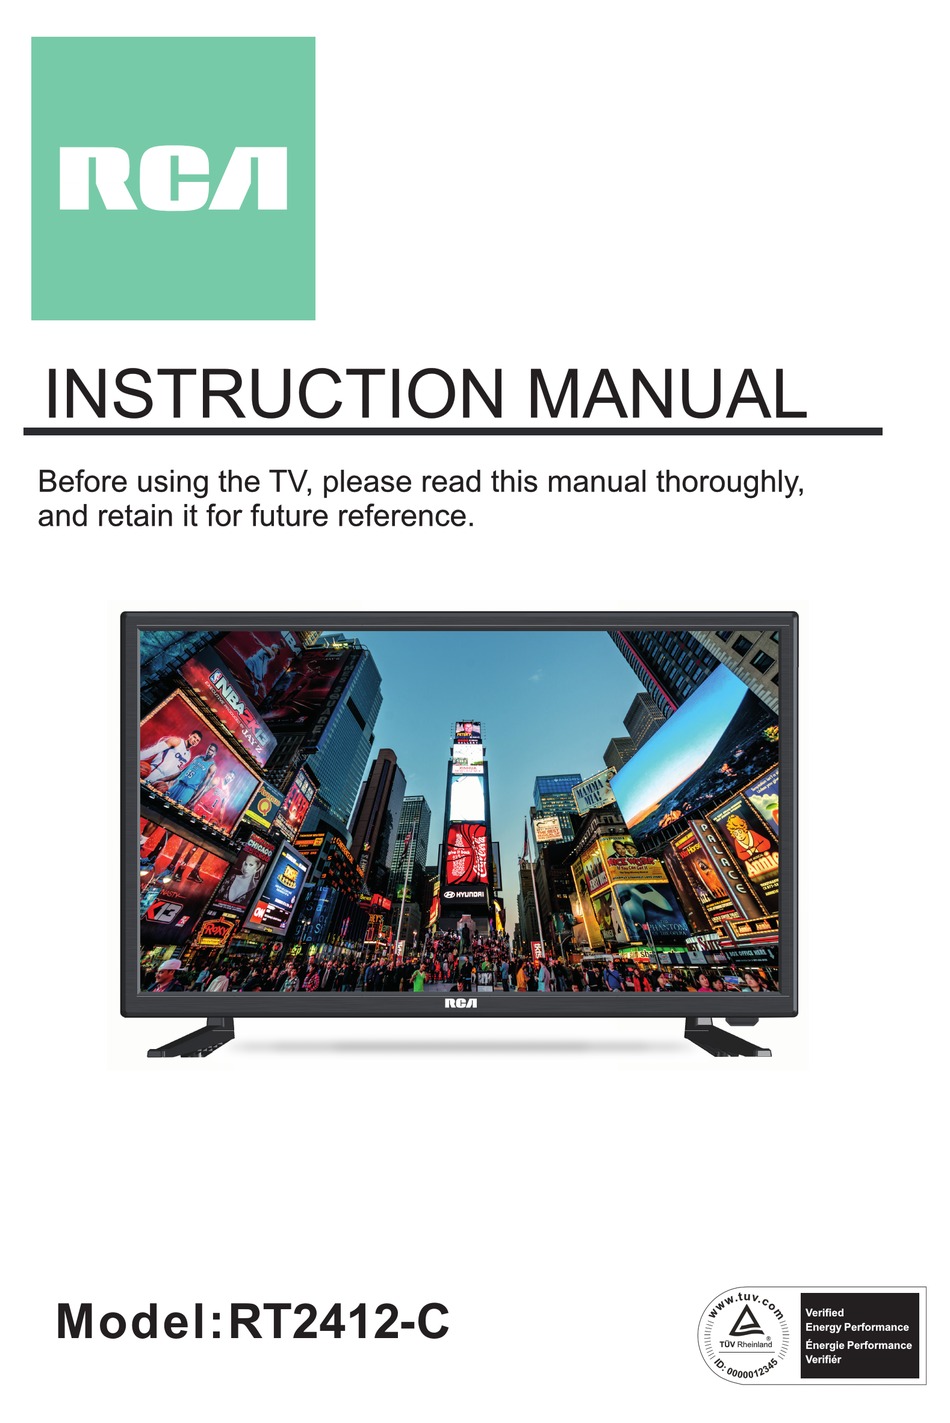 RCA RT2412-C INSTRUCTION MANUAL Pdf Download | ManualsLib